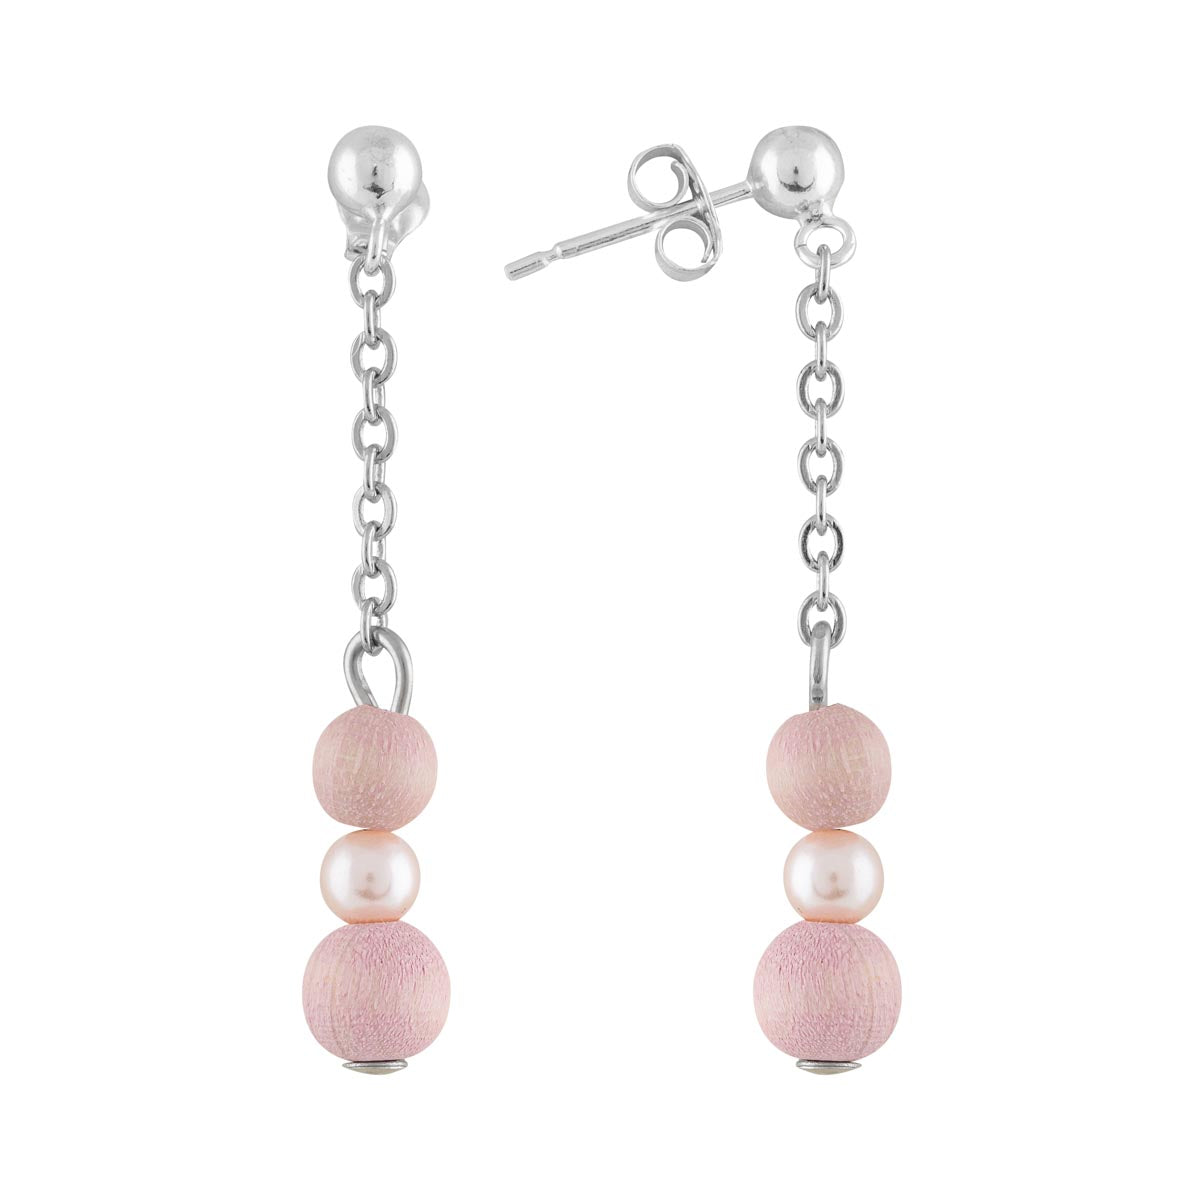 Siro earrings, light pink